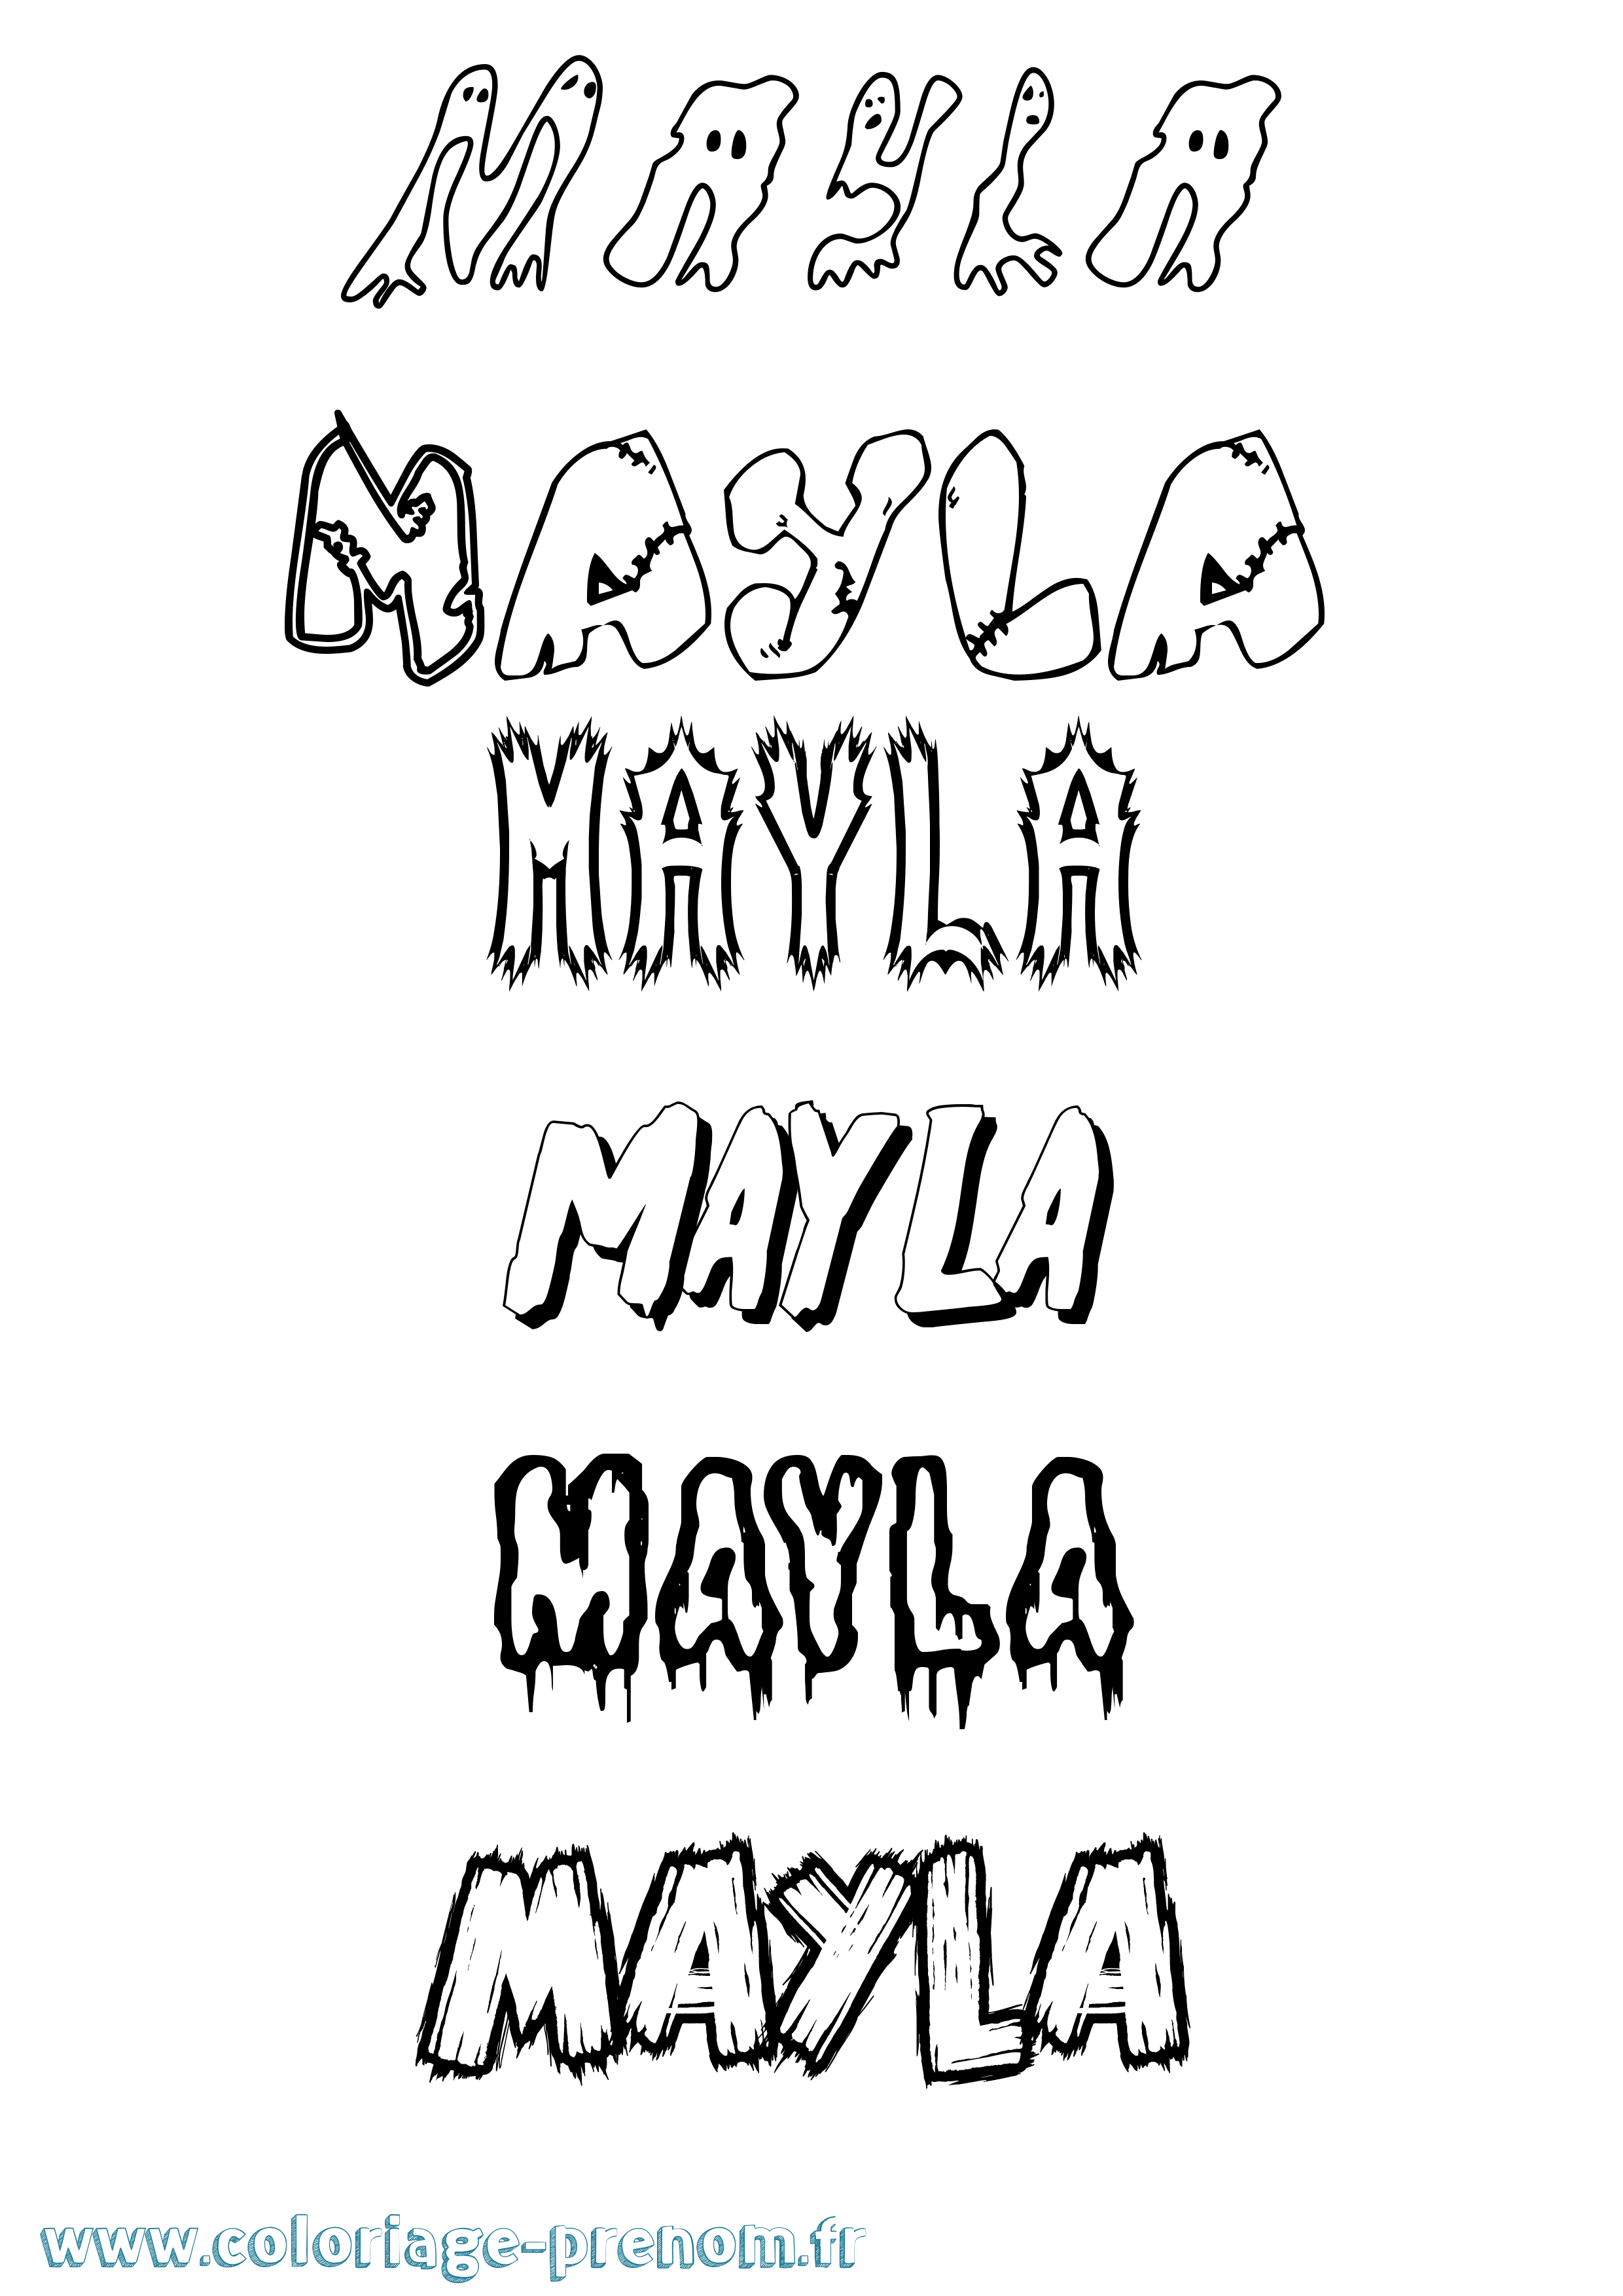 Coloriage prénom Mayla Frisson